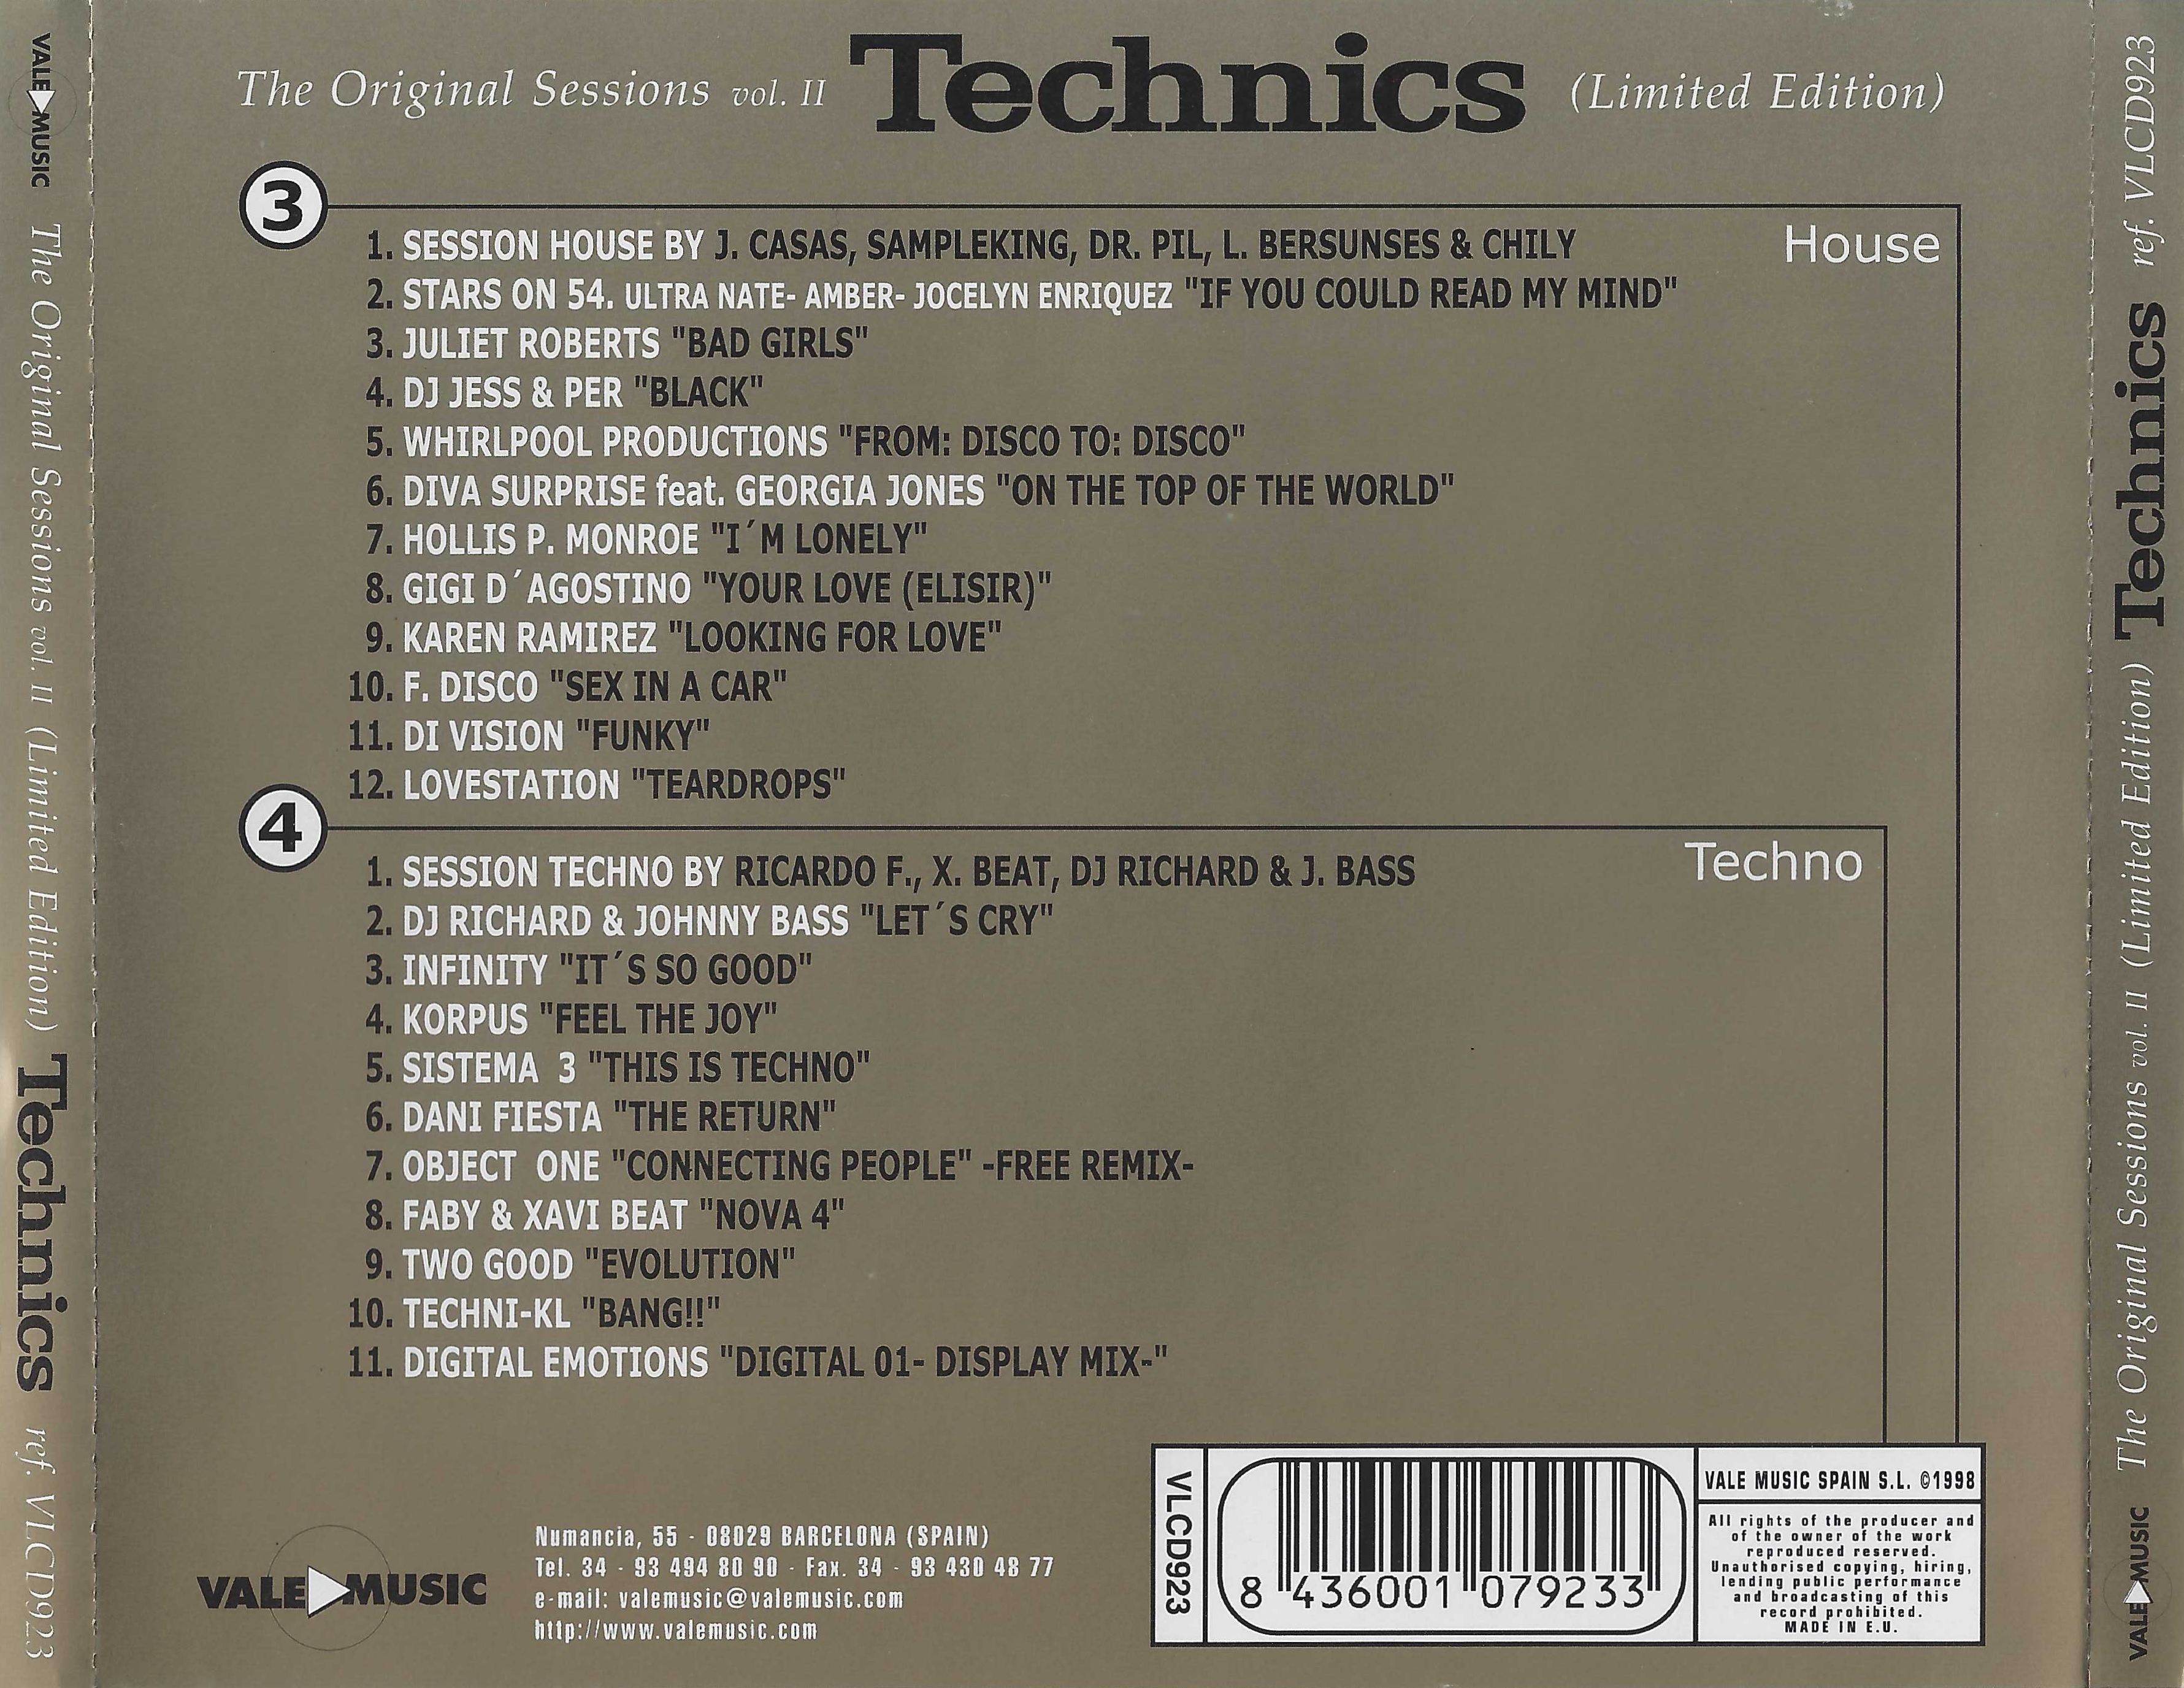 Technics The Original Sessions Vol. II - 4 CD's - 1998 - Vale Music ...